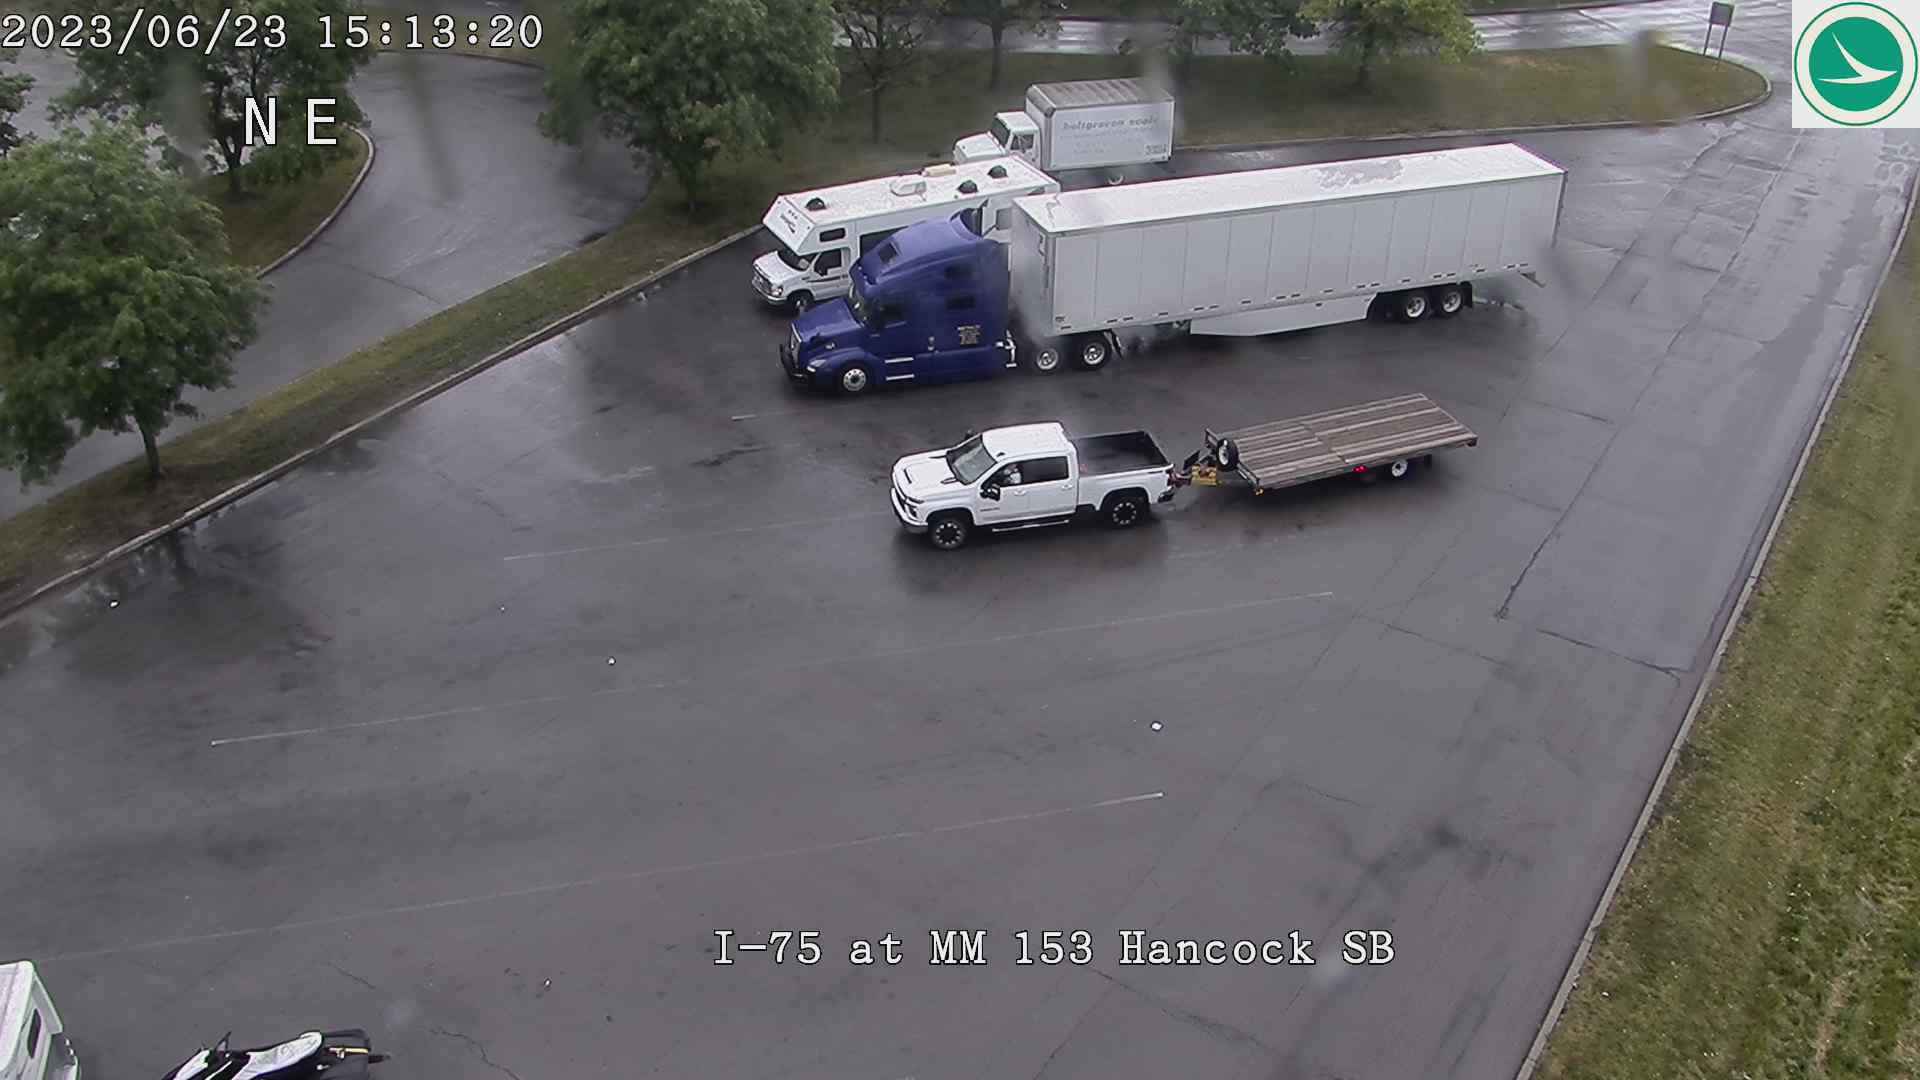 I-75 SB Hancock county rest area Traffic Camera